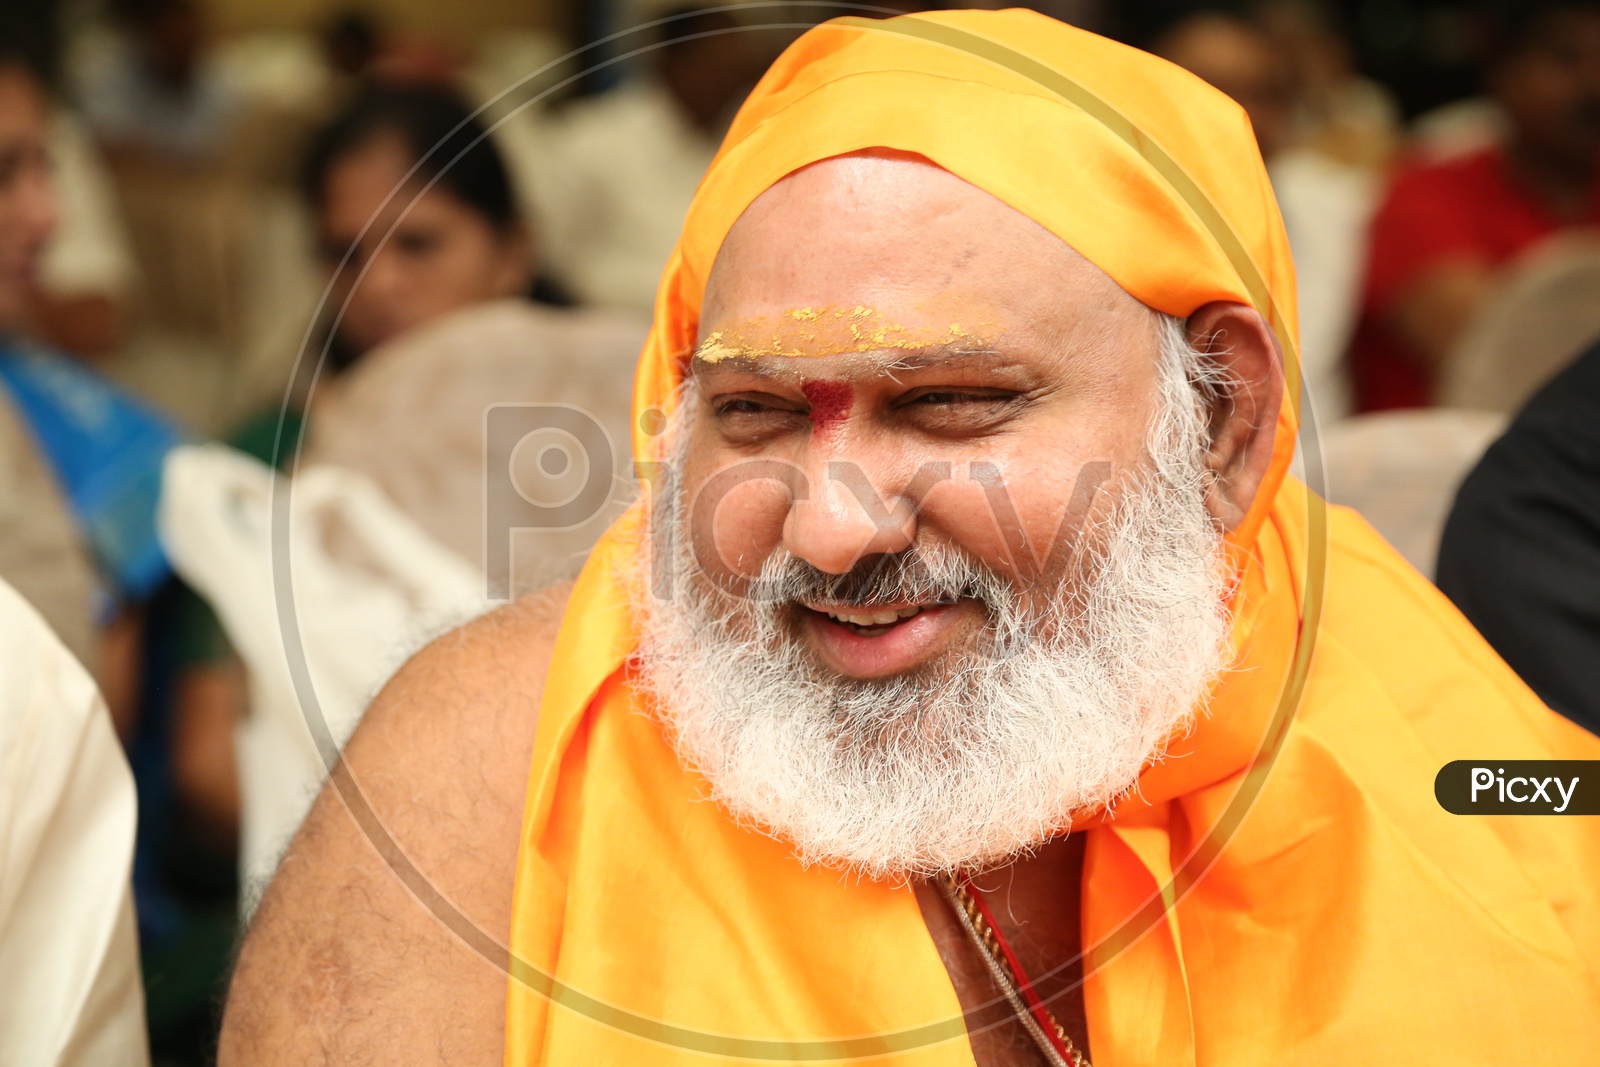 Indian Saint with White Beard